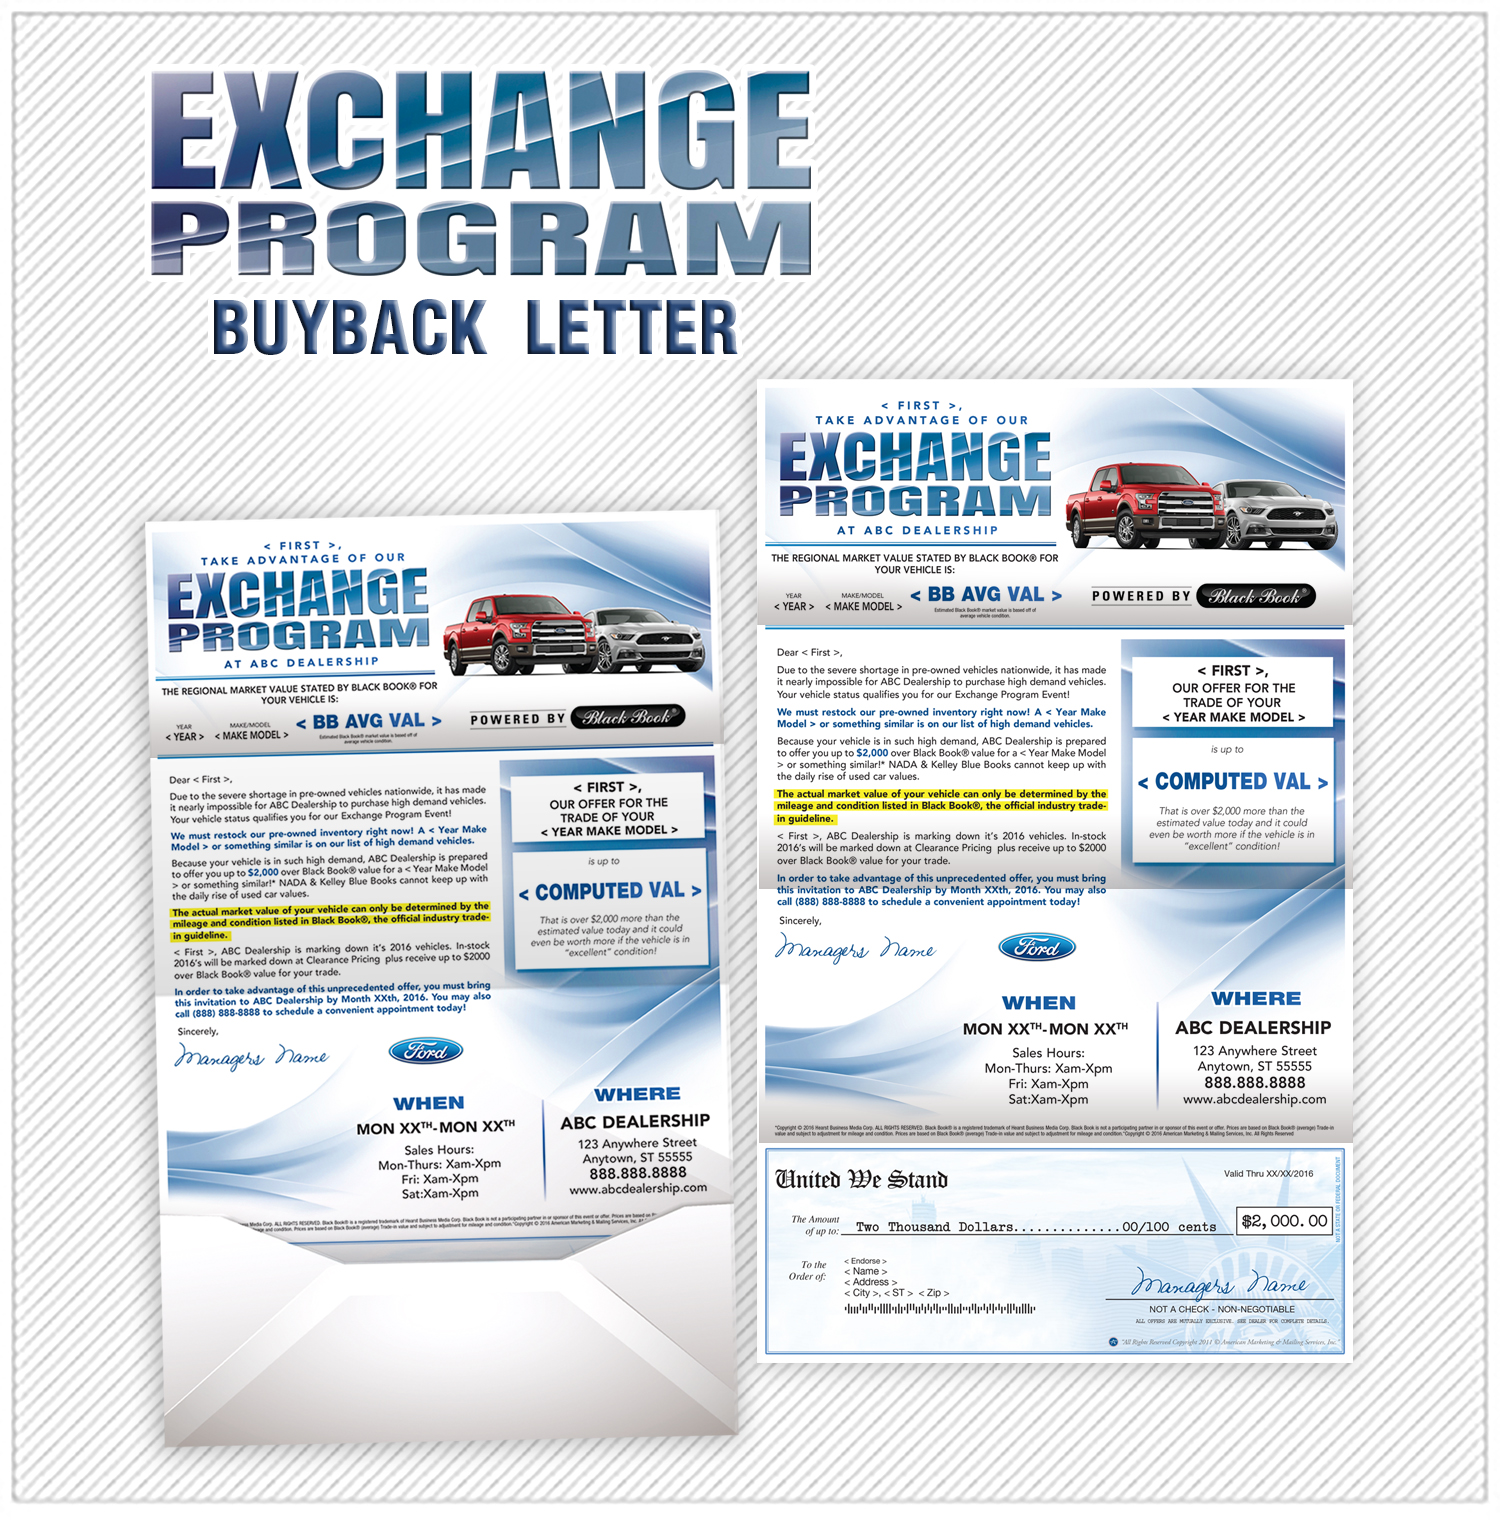 Exhange Program Buyback Letter